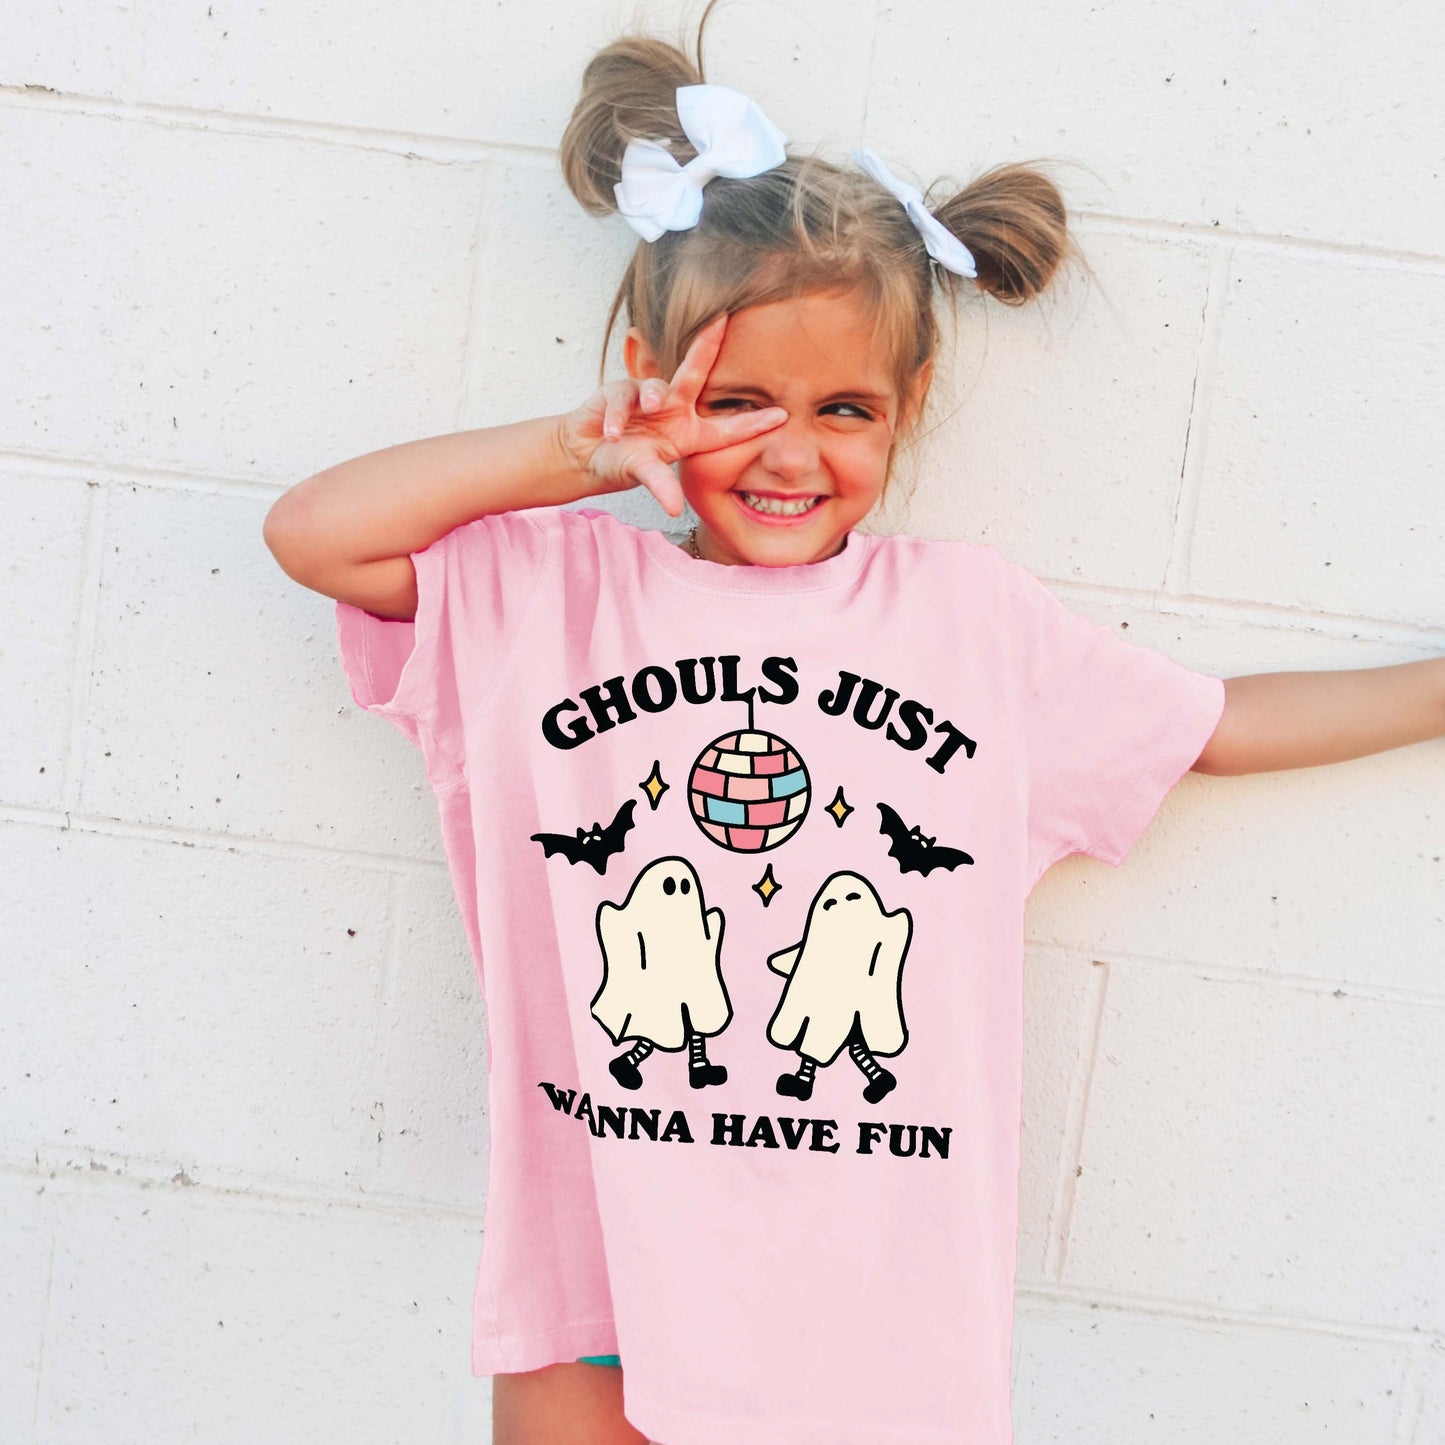 'Ghouls just wanna have Fun' Kid's Halloween T-shirt